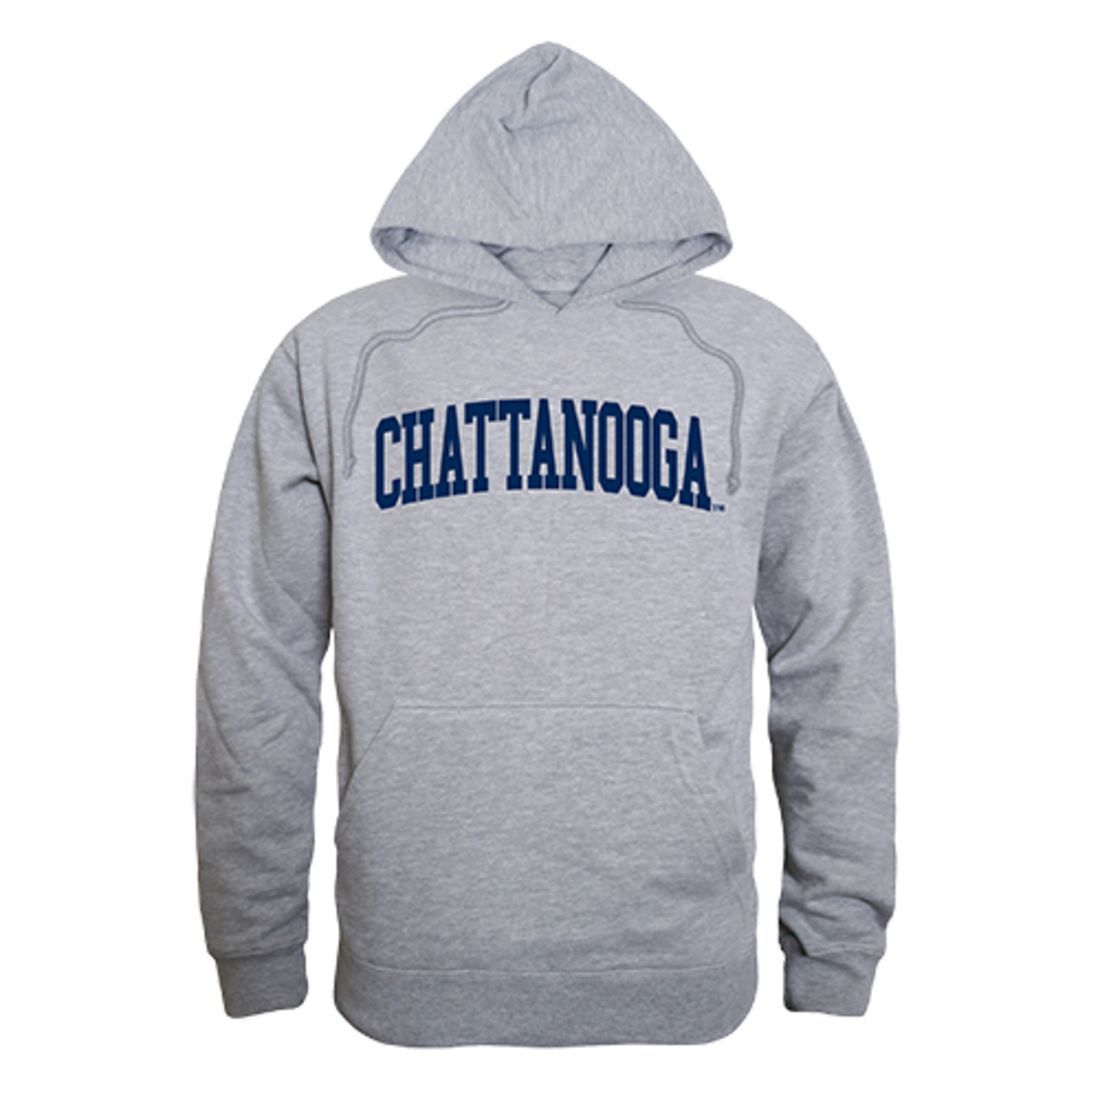 University of Tennessee at Chattanooga (UTC) MOCS Game Day Hoodie Sweatshirt Heather Grey-Campus-Wardrobe